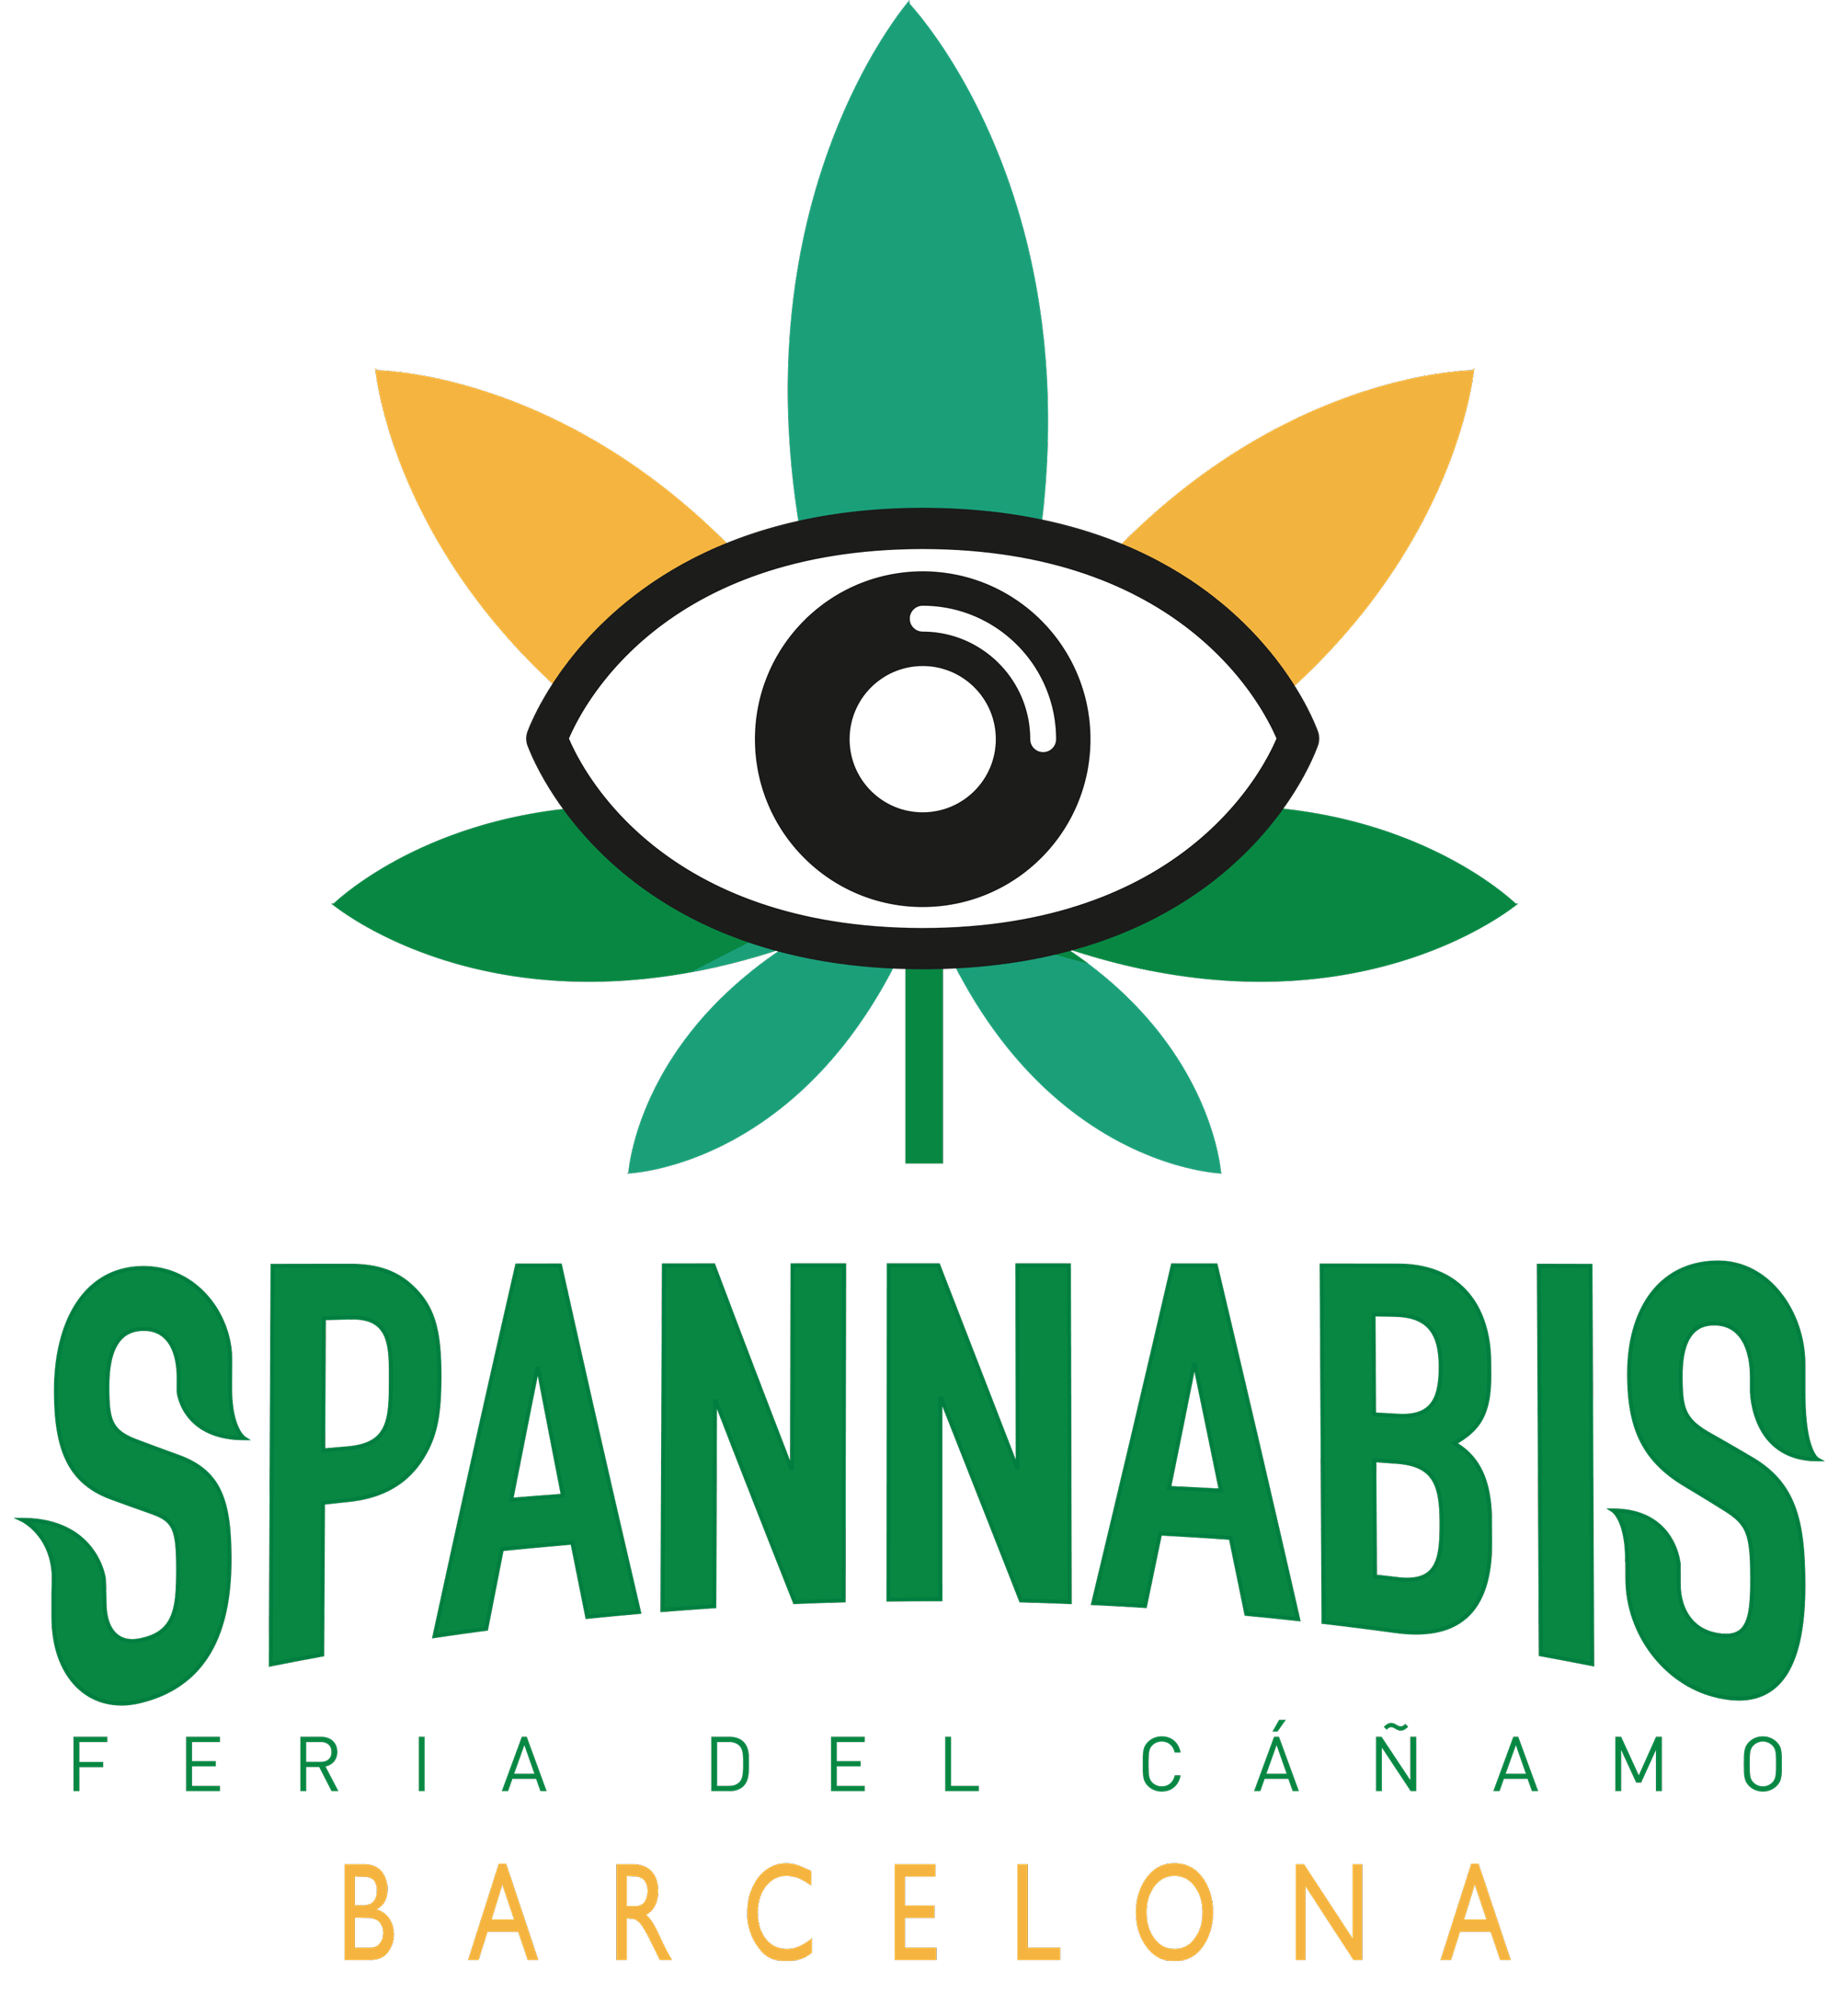 Spannabis i CannabisHub Cdays 2023: Tot el que has de saber